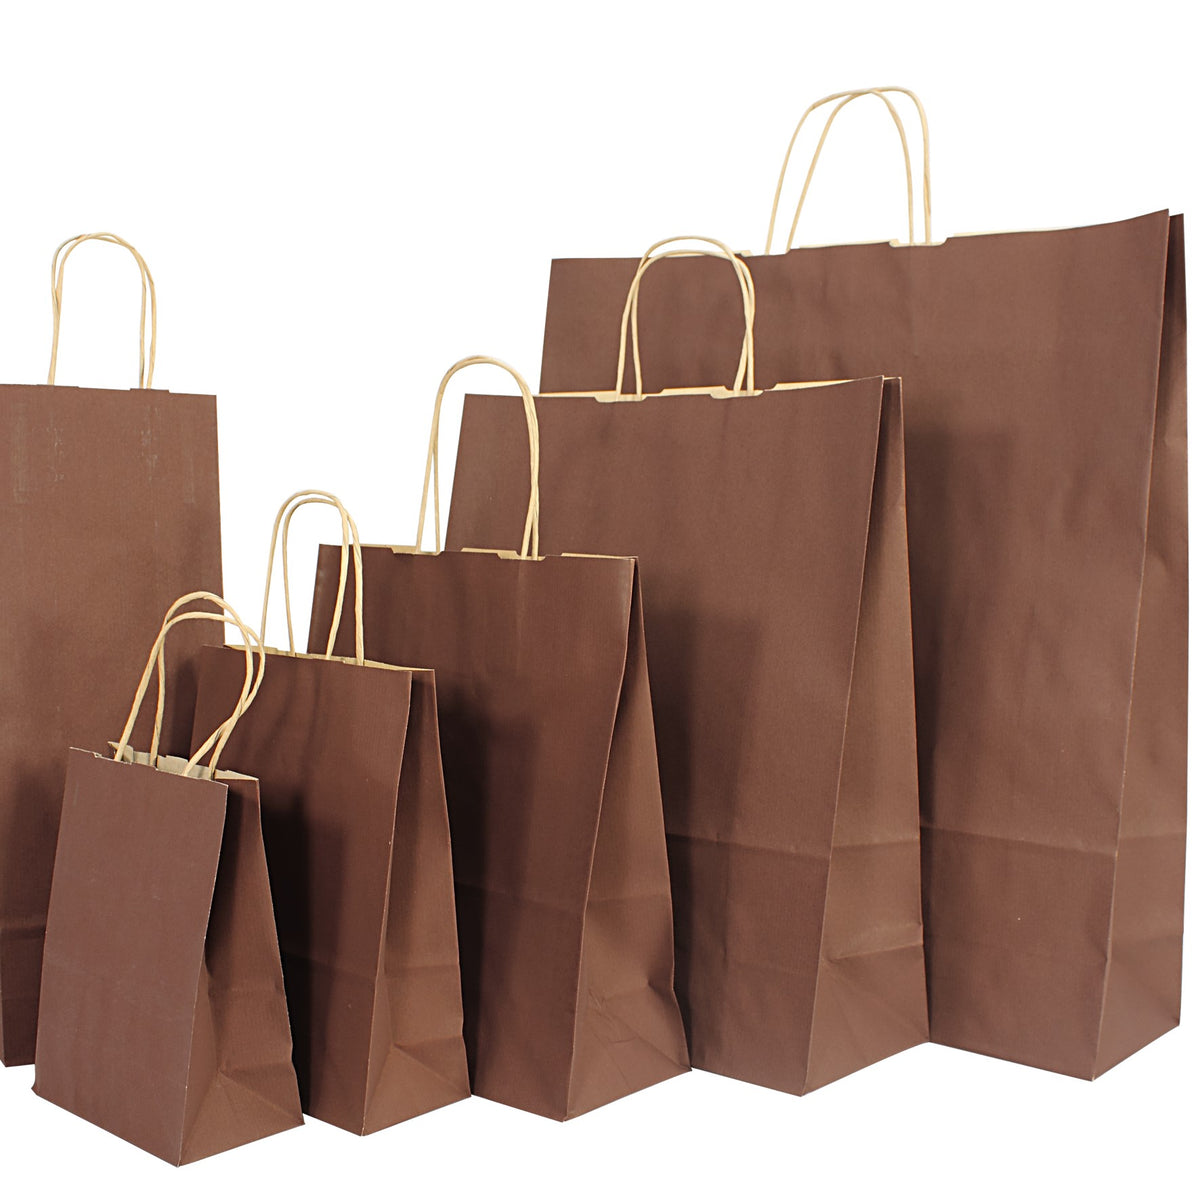 Kraft Bags from Kraft Colours range - Chocolate Brown